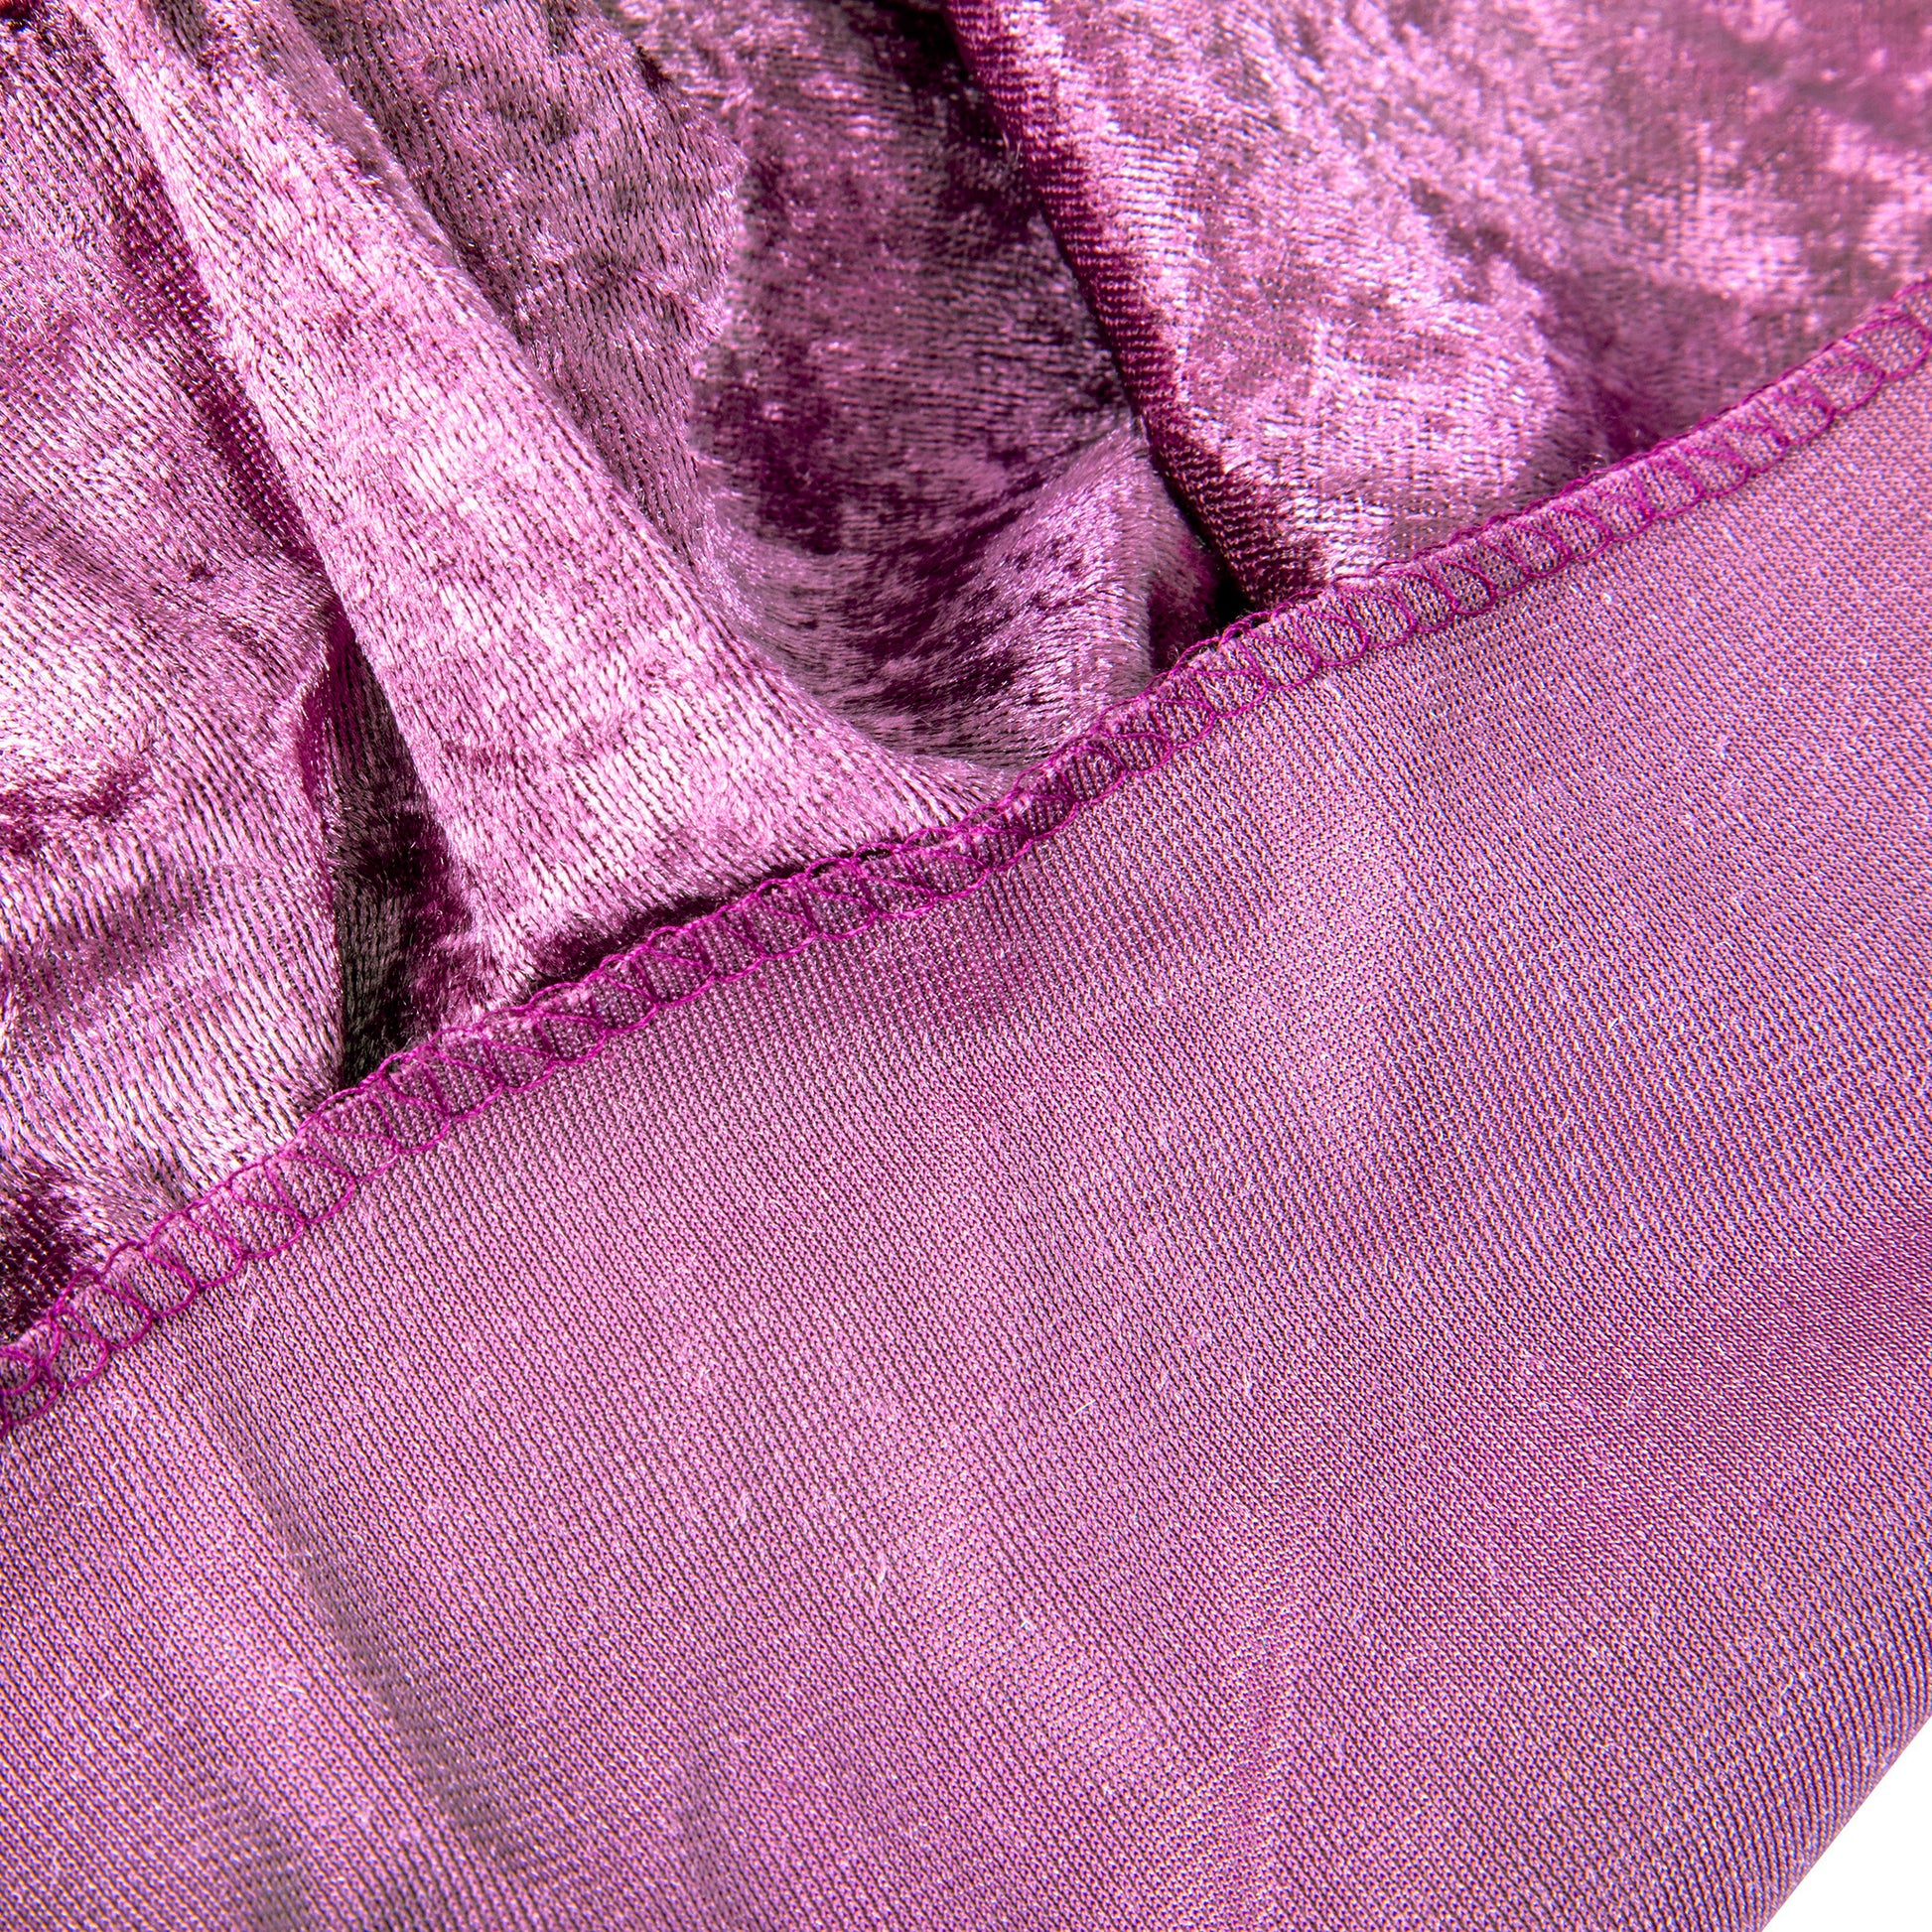 Velvet 120" Round Tablecloth - Violet